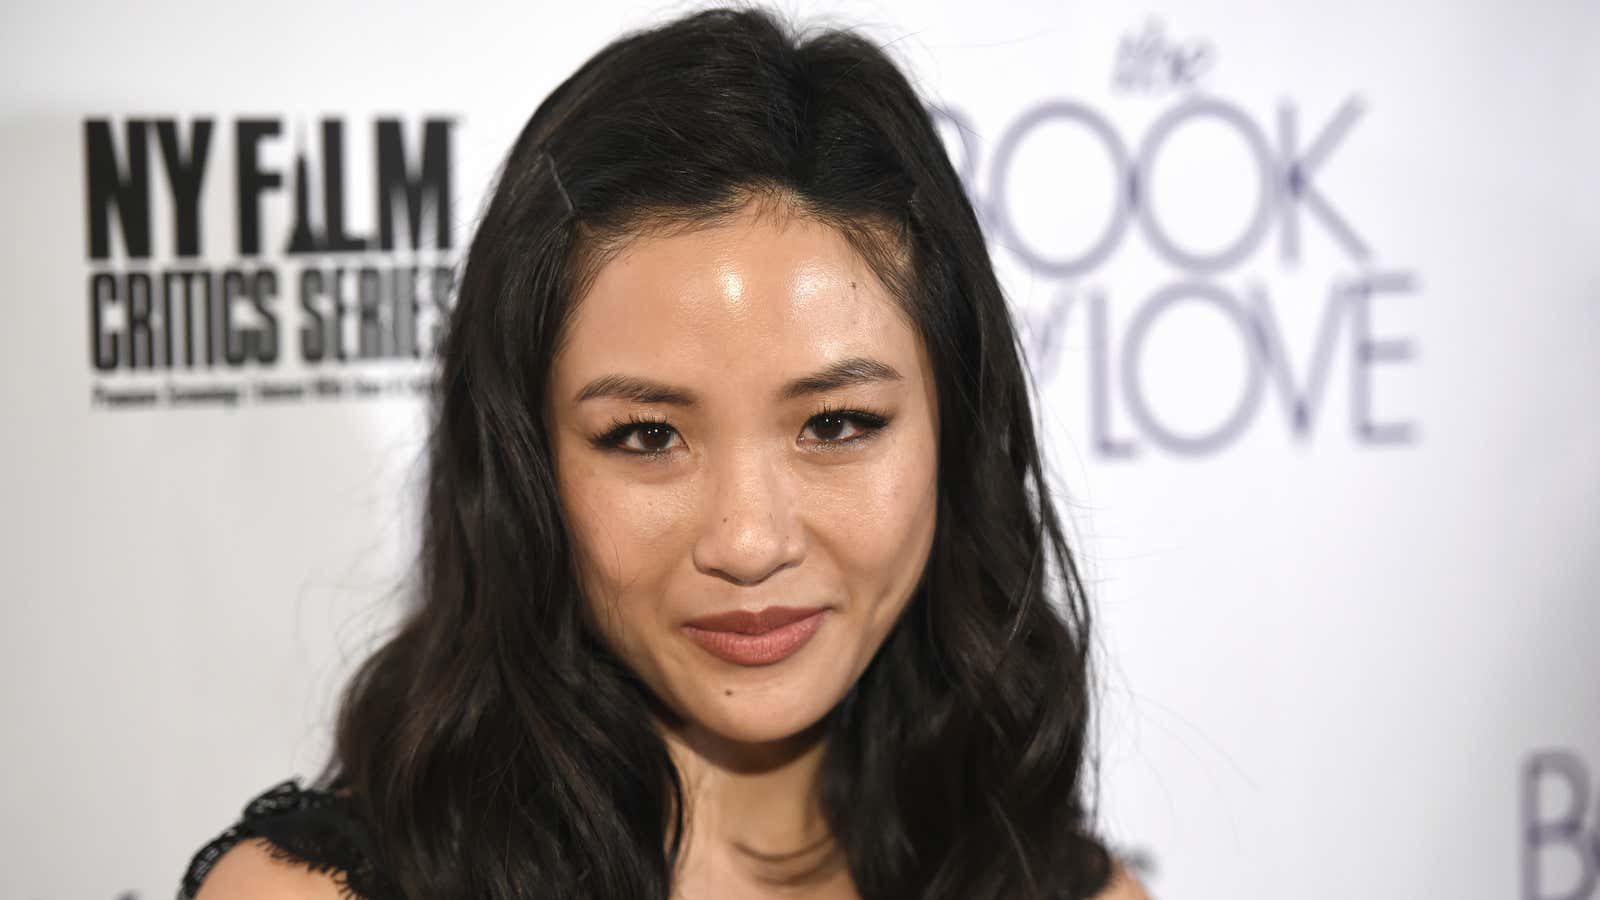 Constance Wu plays the economist Rachel Chu in Crazy Rich Asians